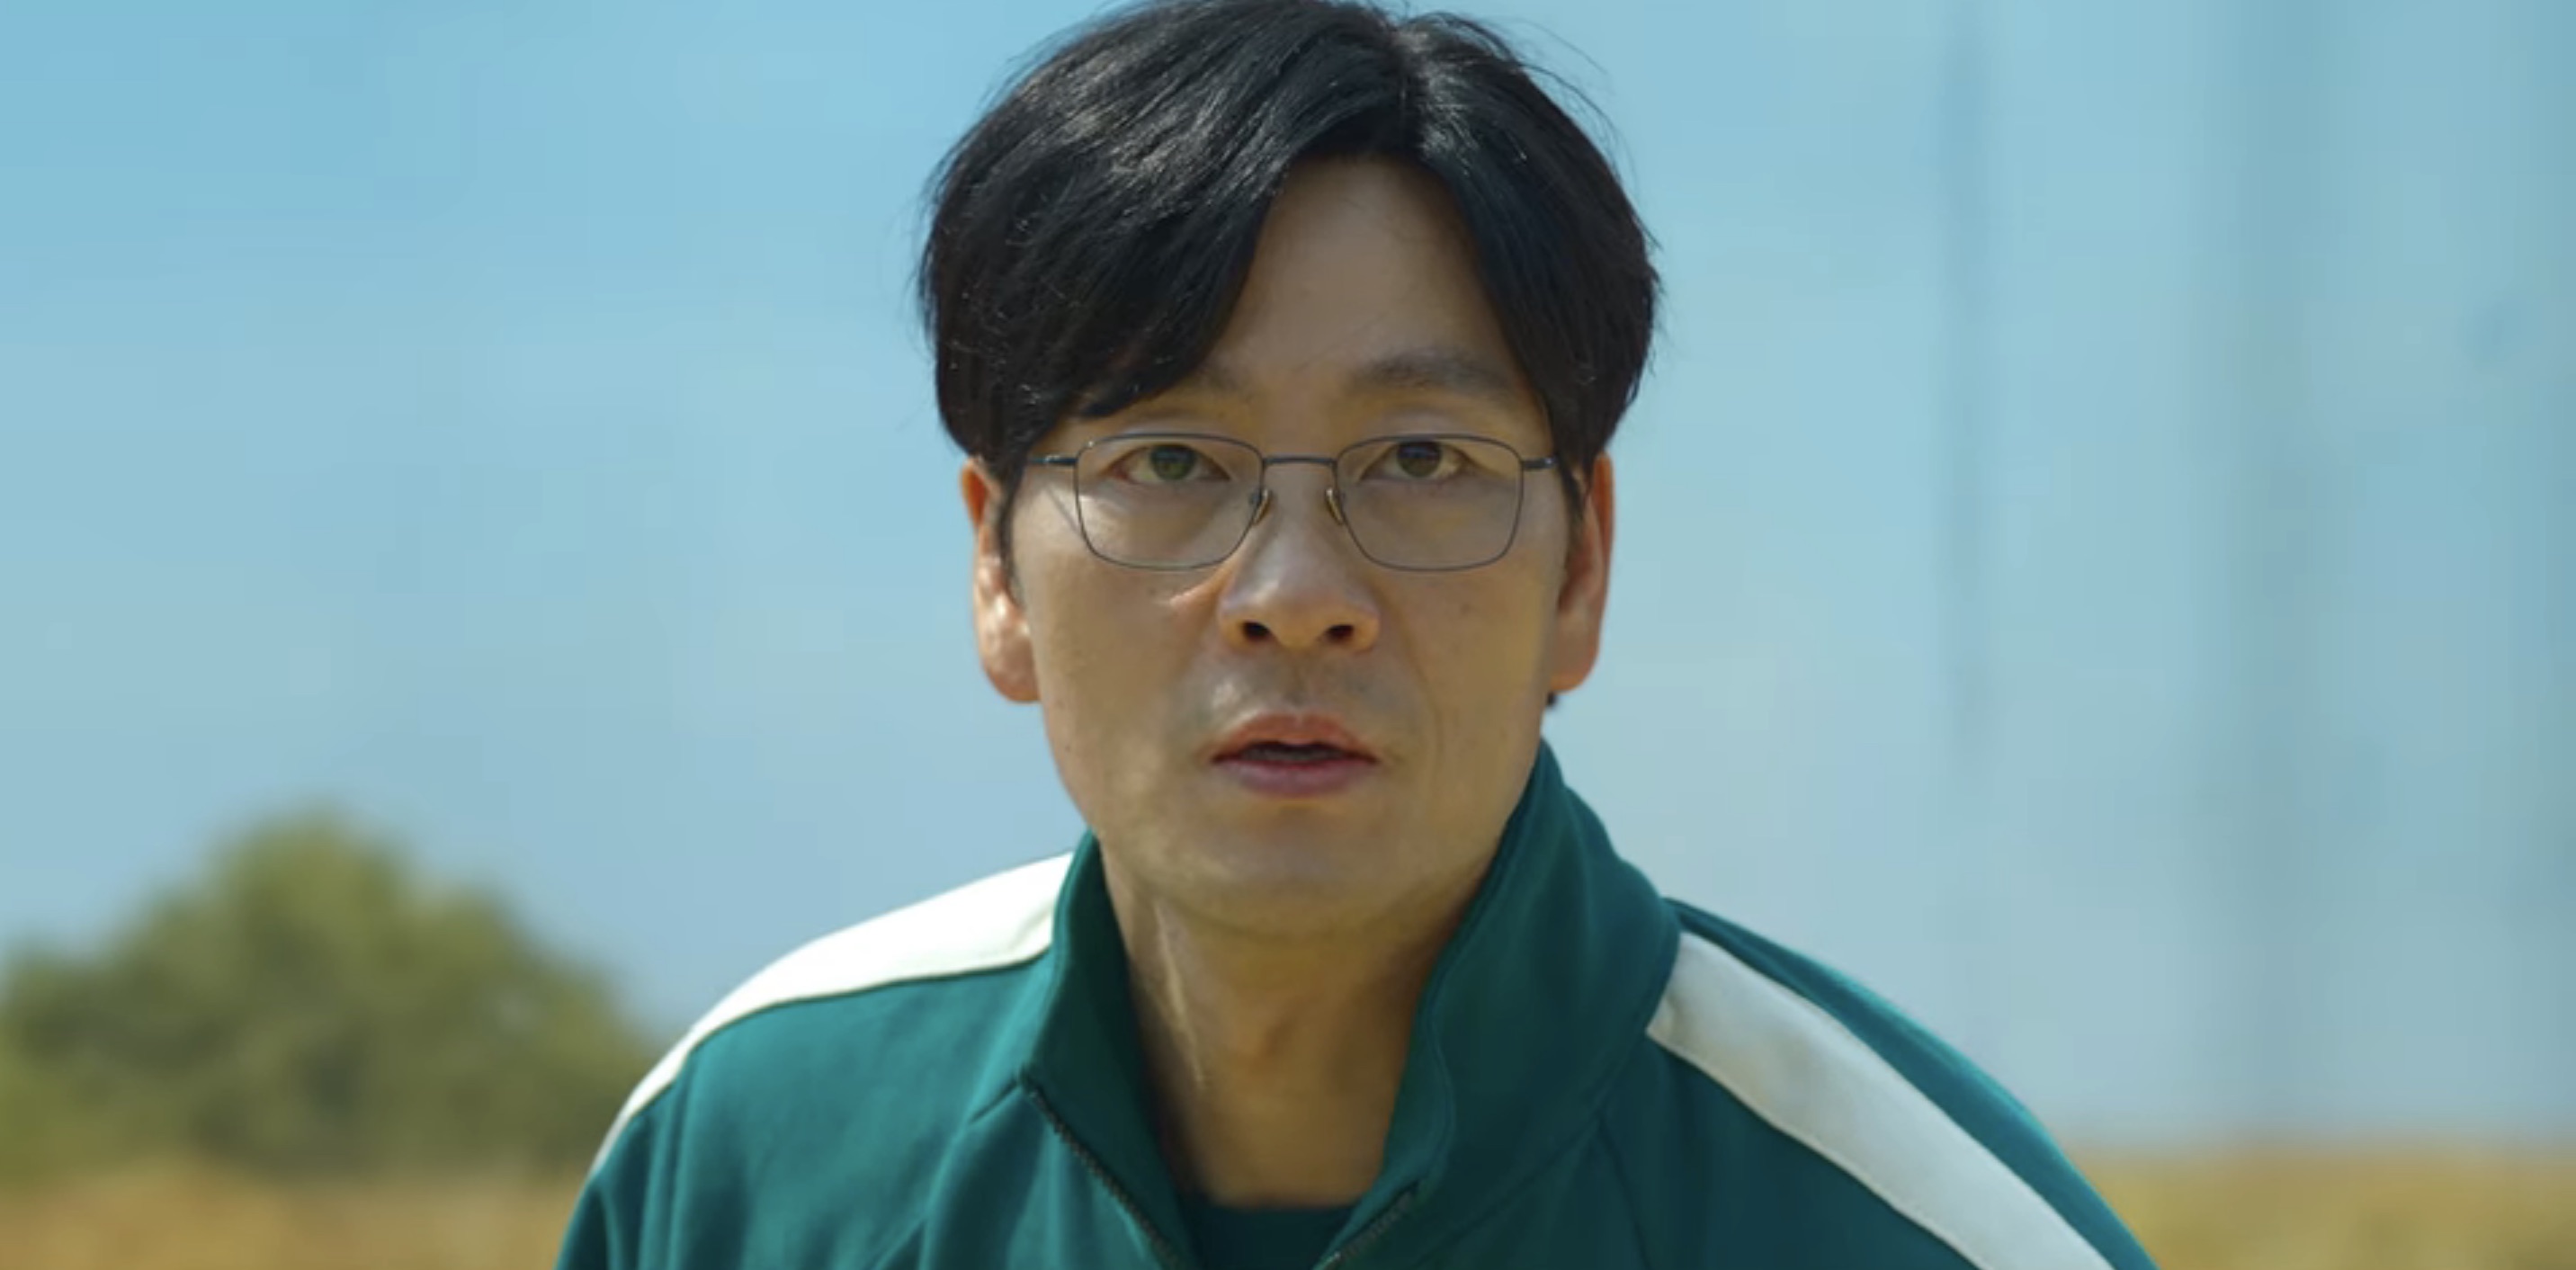 Squid Game Cast - Hae-soo Park as Sang-woo Park